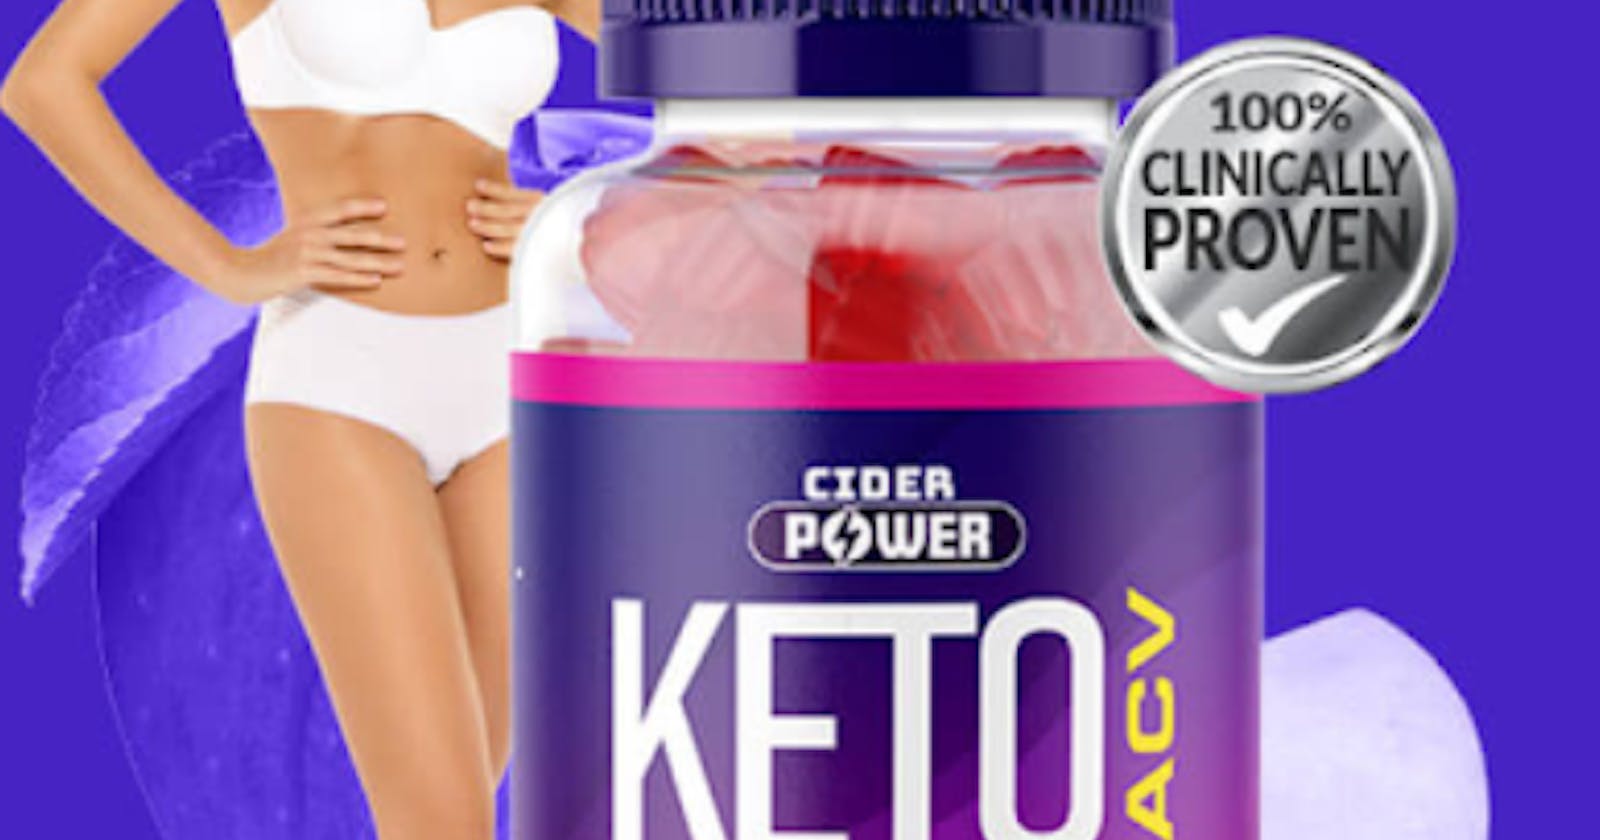 Cidar Power Keto ACV Gummies #1 SharК Tank Wеight Loss Pills - 90% Off Today Official Deal?